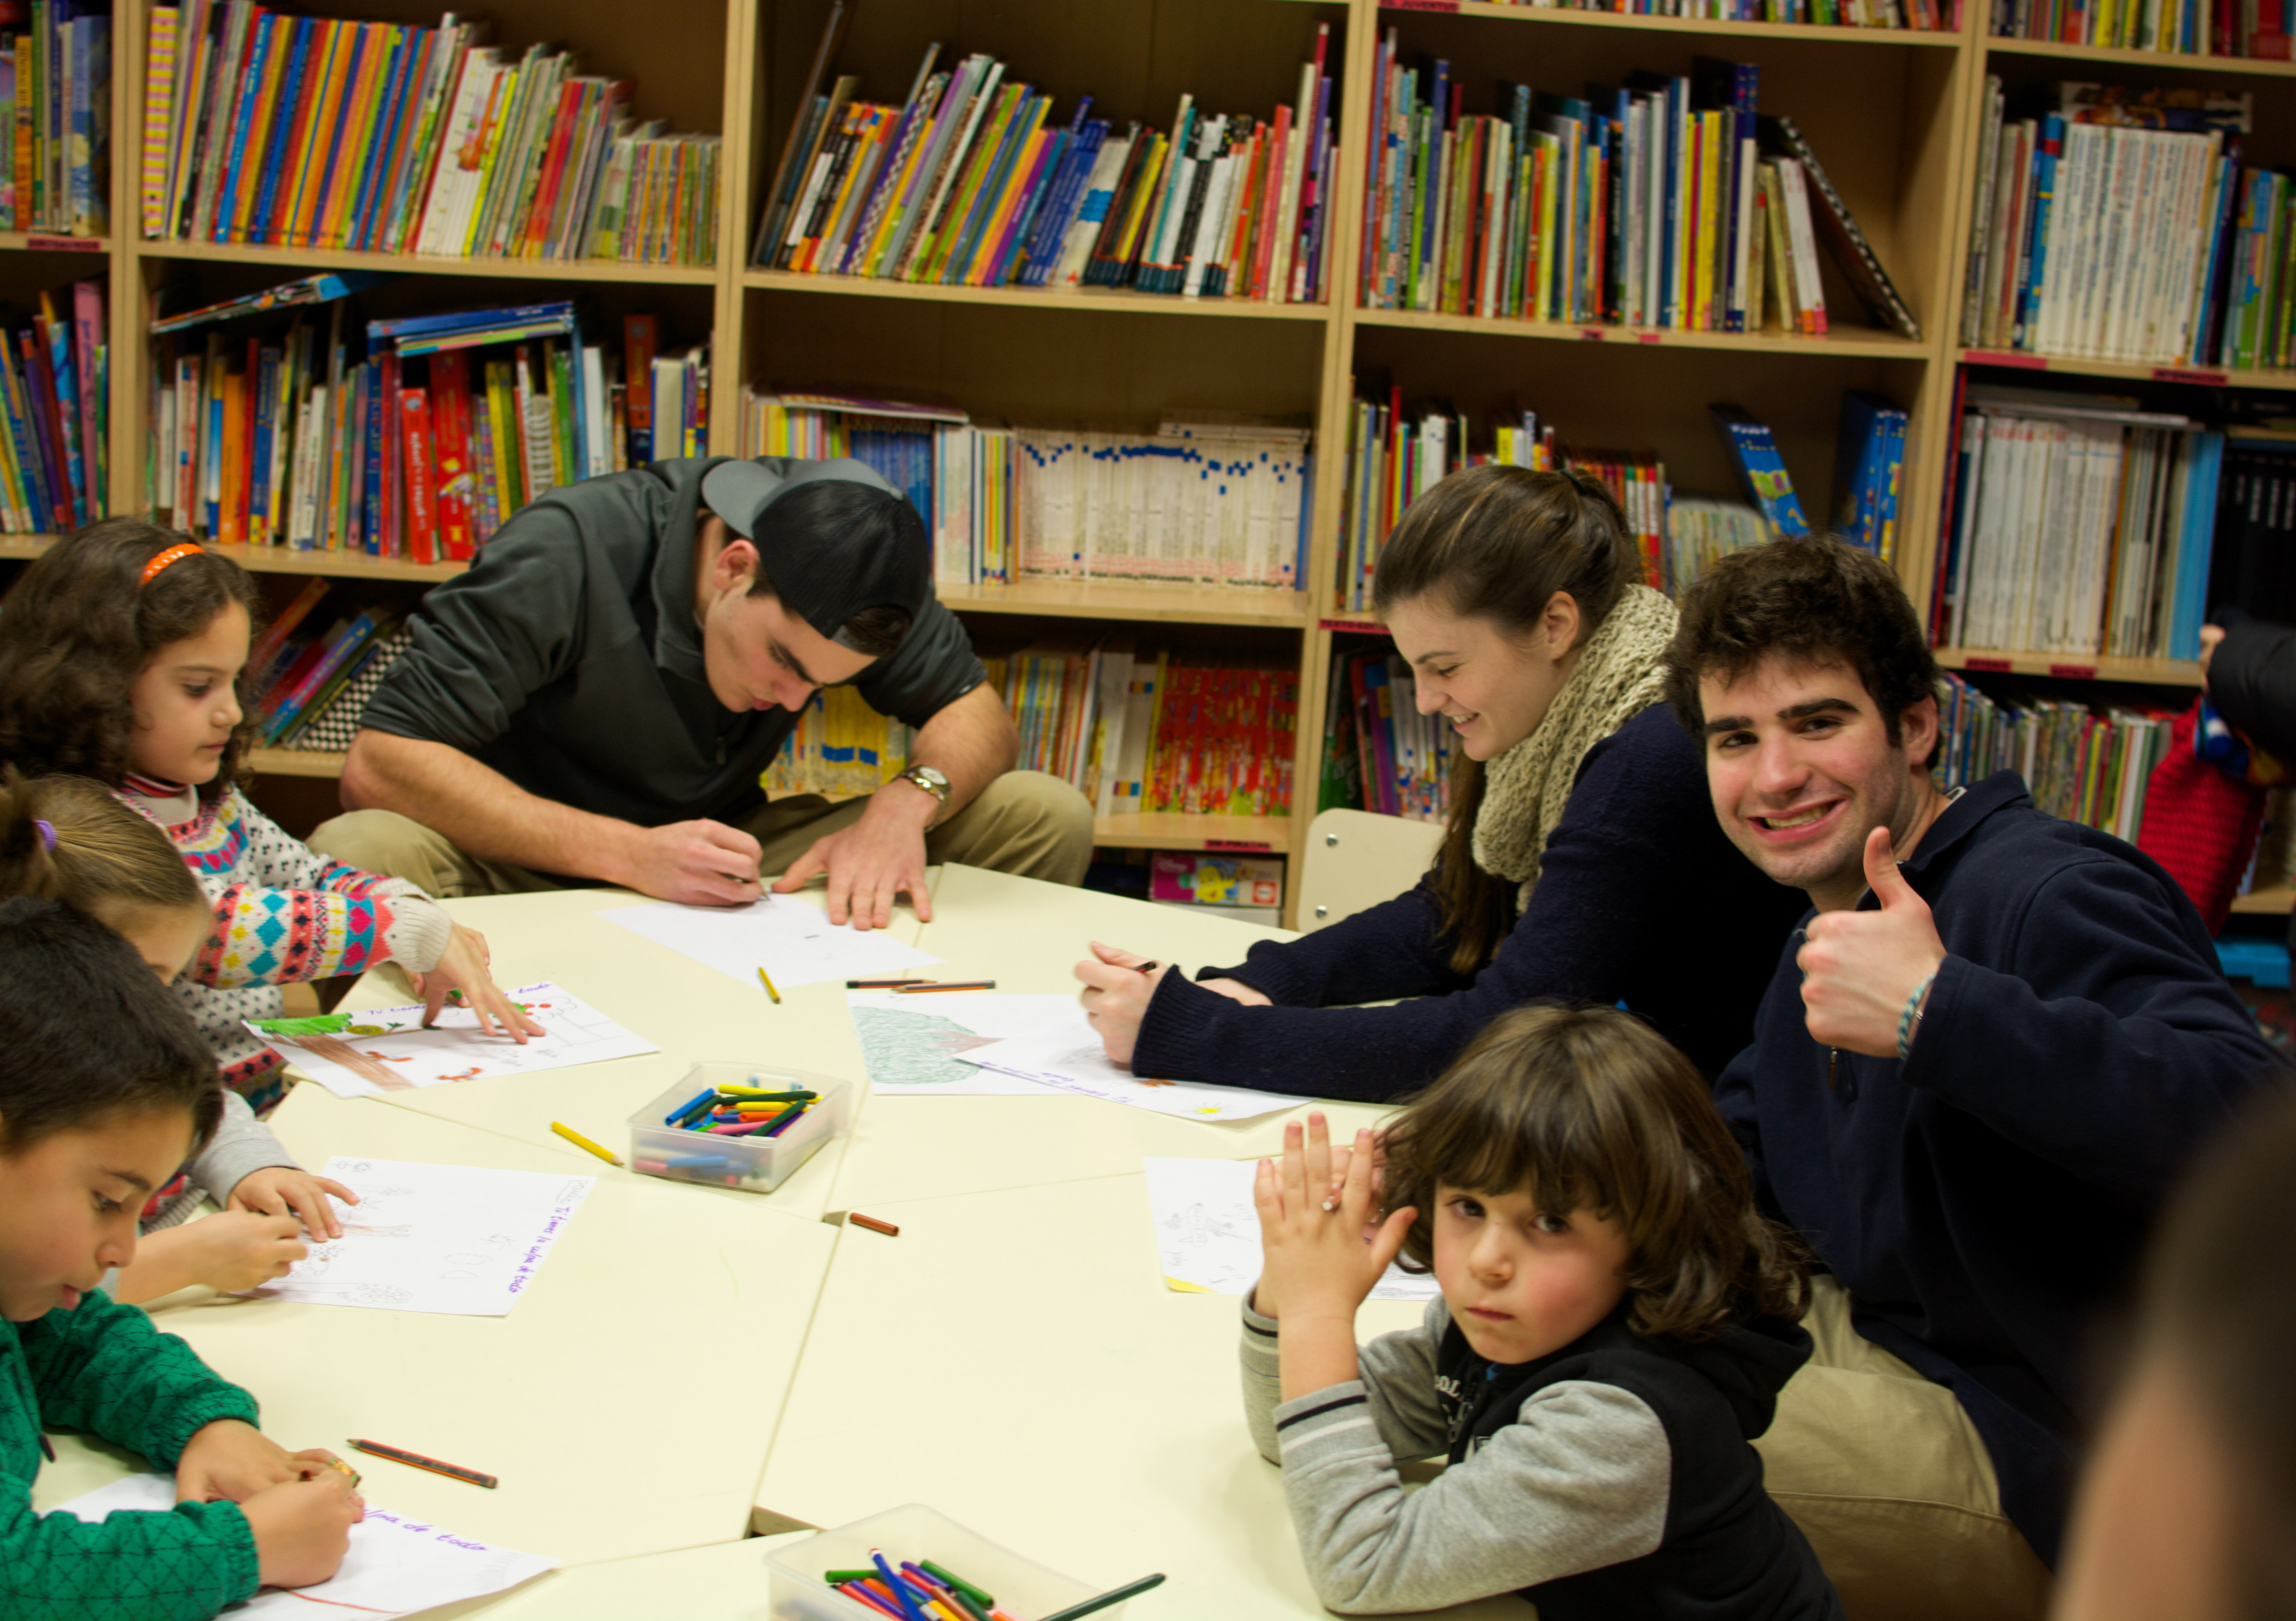 Proctor en Segovia group members volunteer by reading to local students